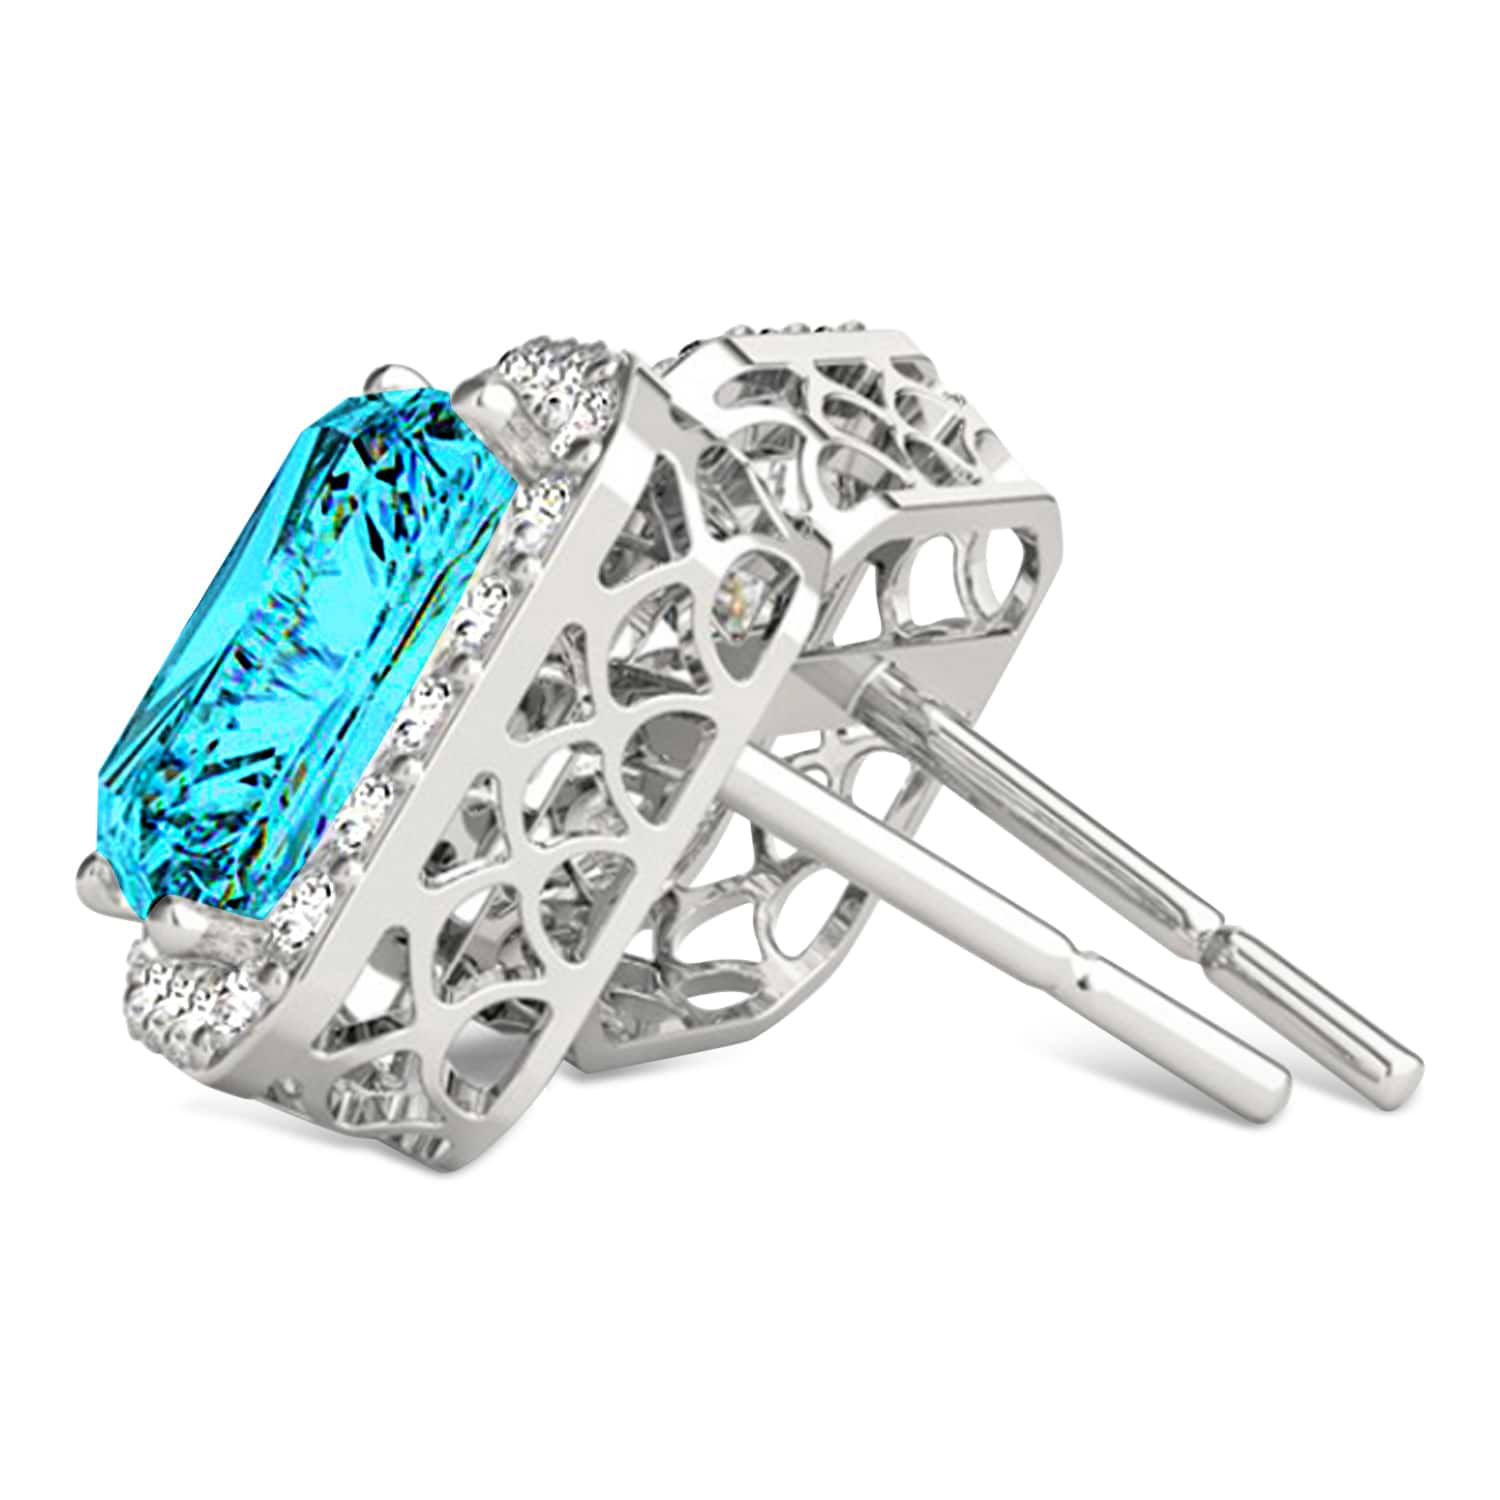 Emerald Cut Blue & White Diamond Halo Earrings 14k White Gold (2.42ct)